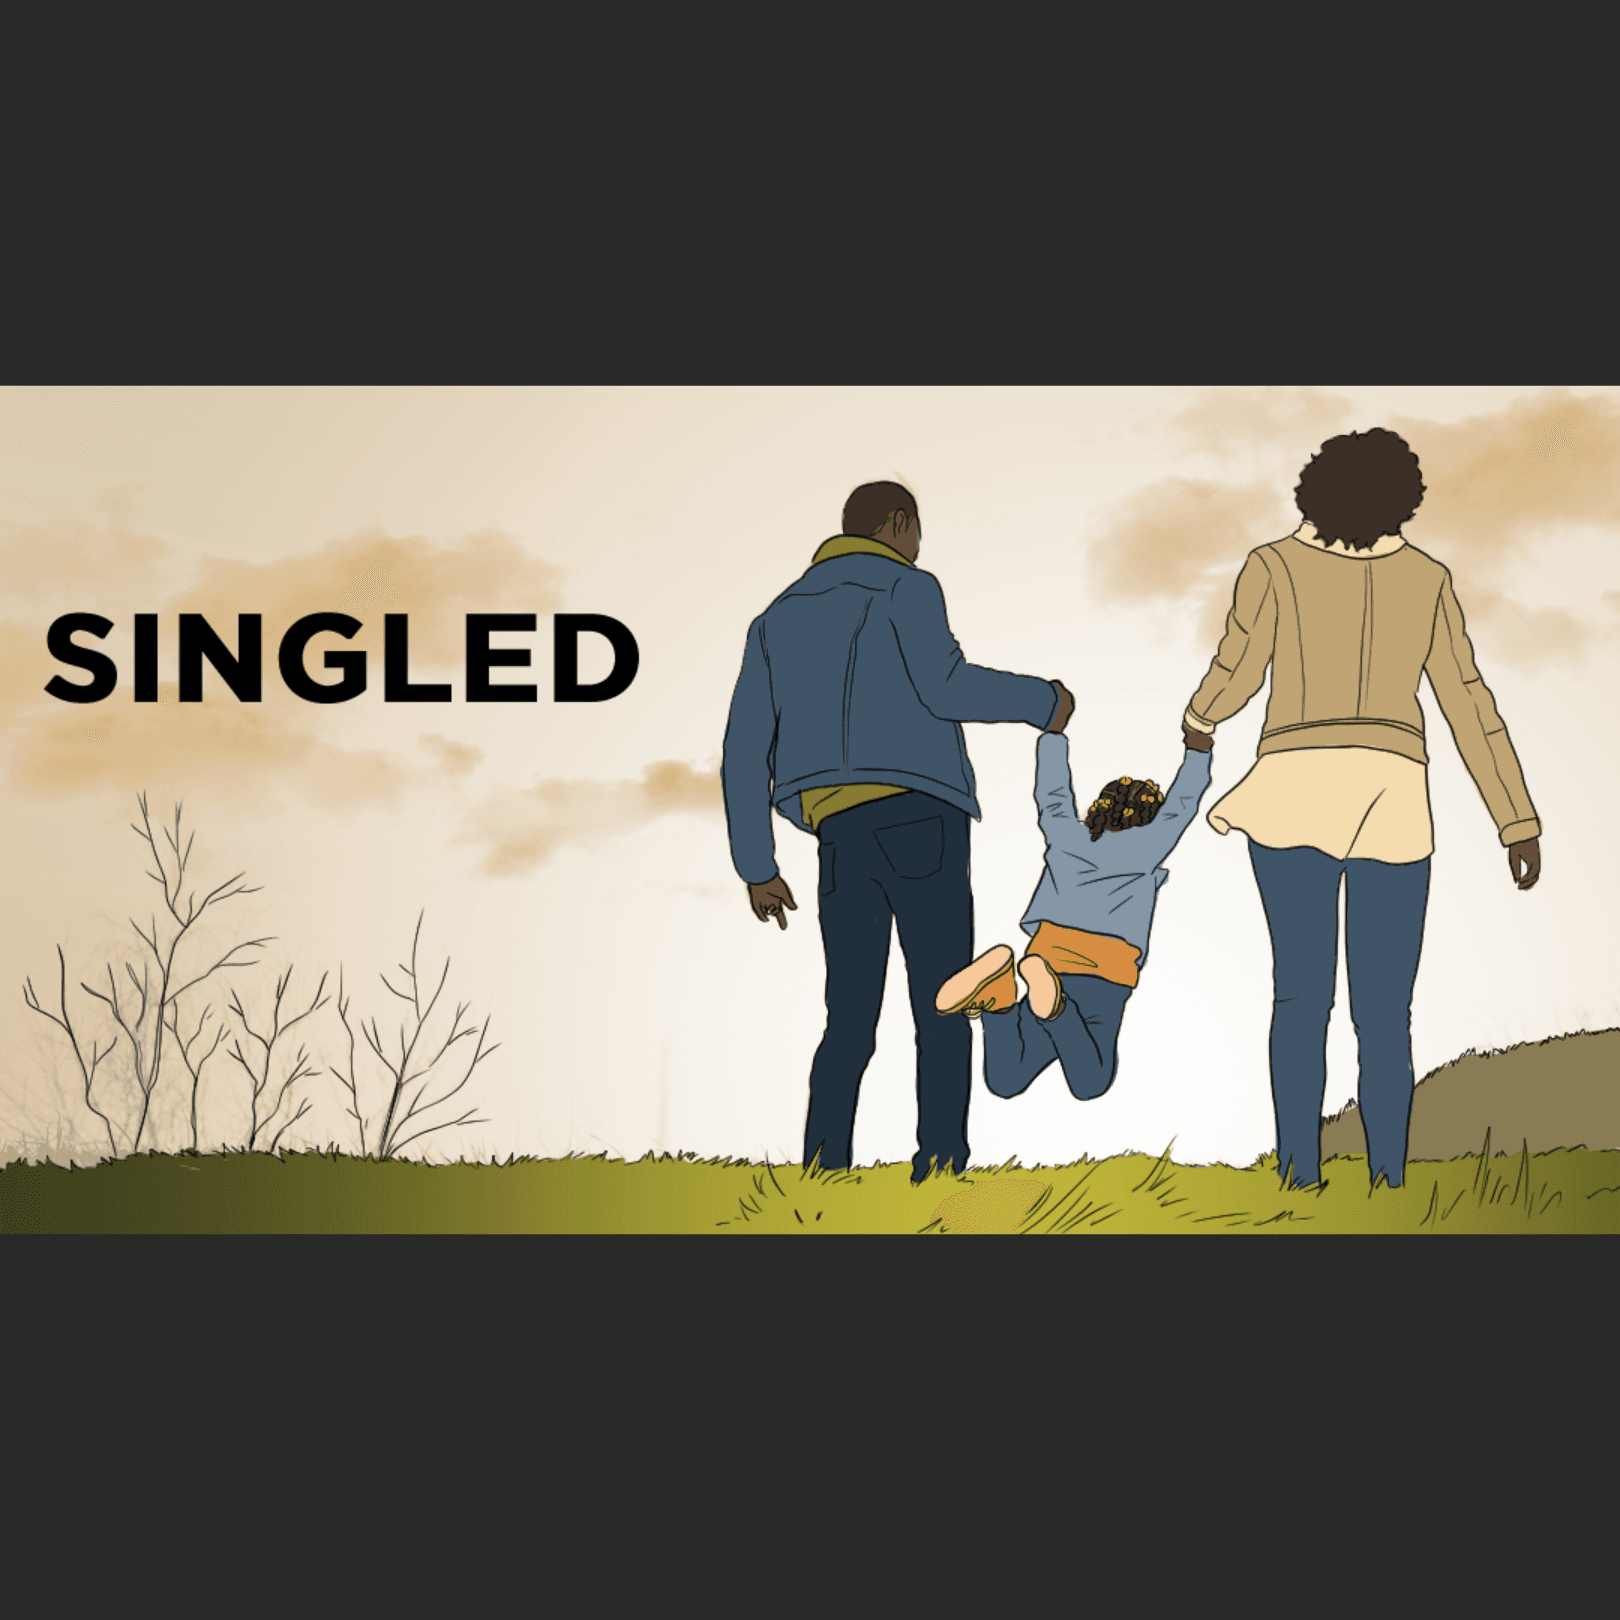 Thumbnail for "Singled: Inside The Only-Child Family".